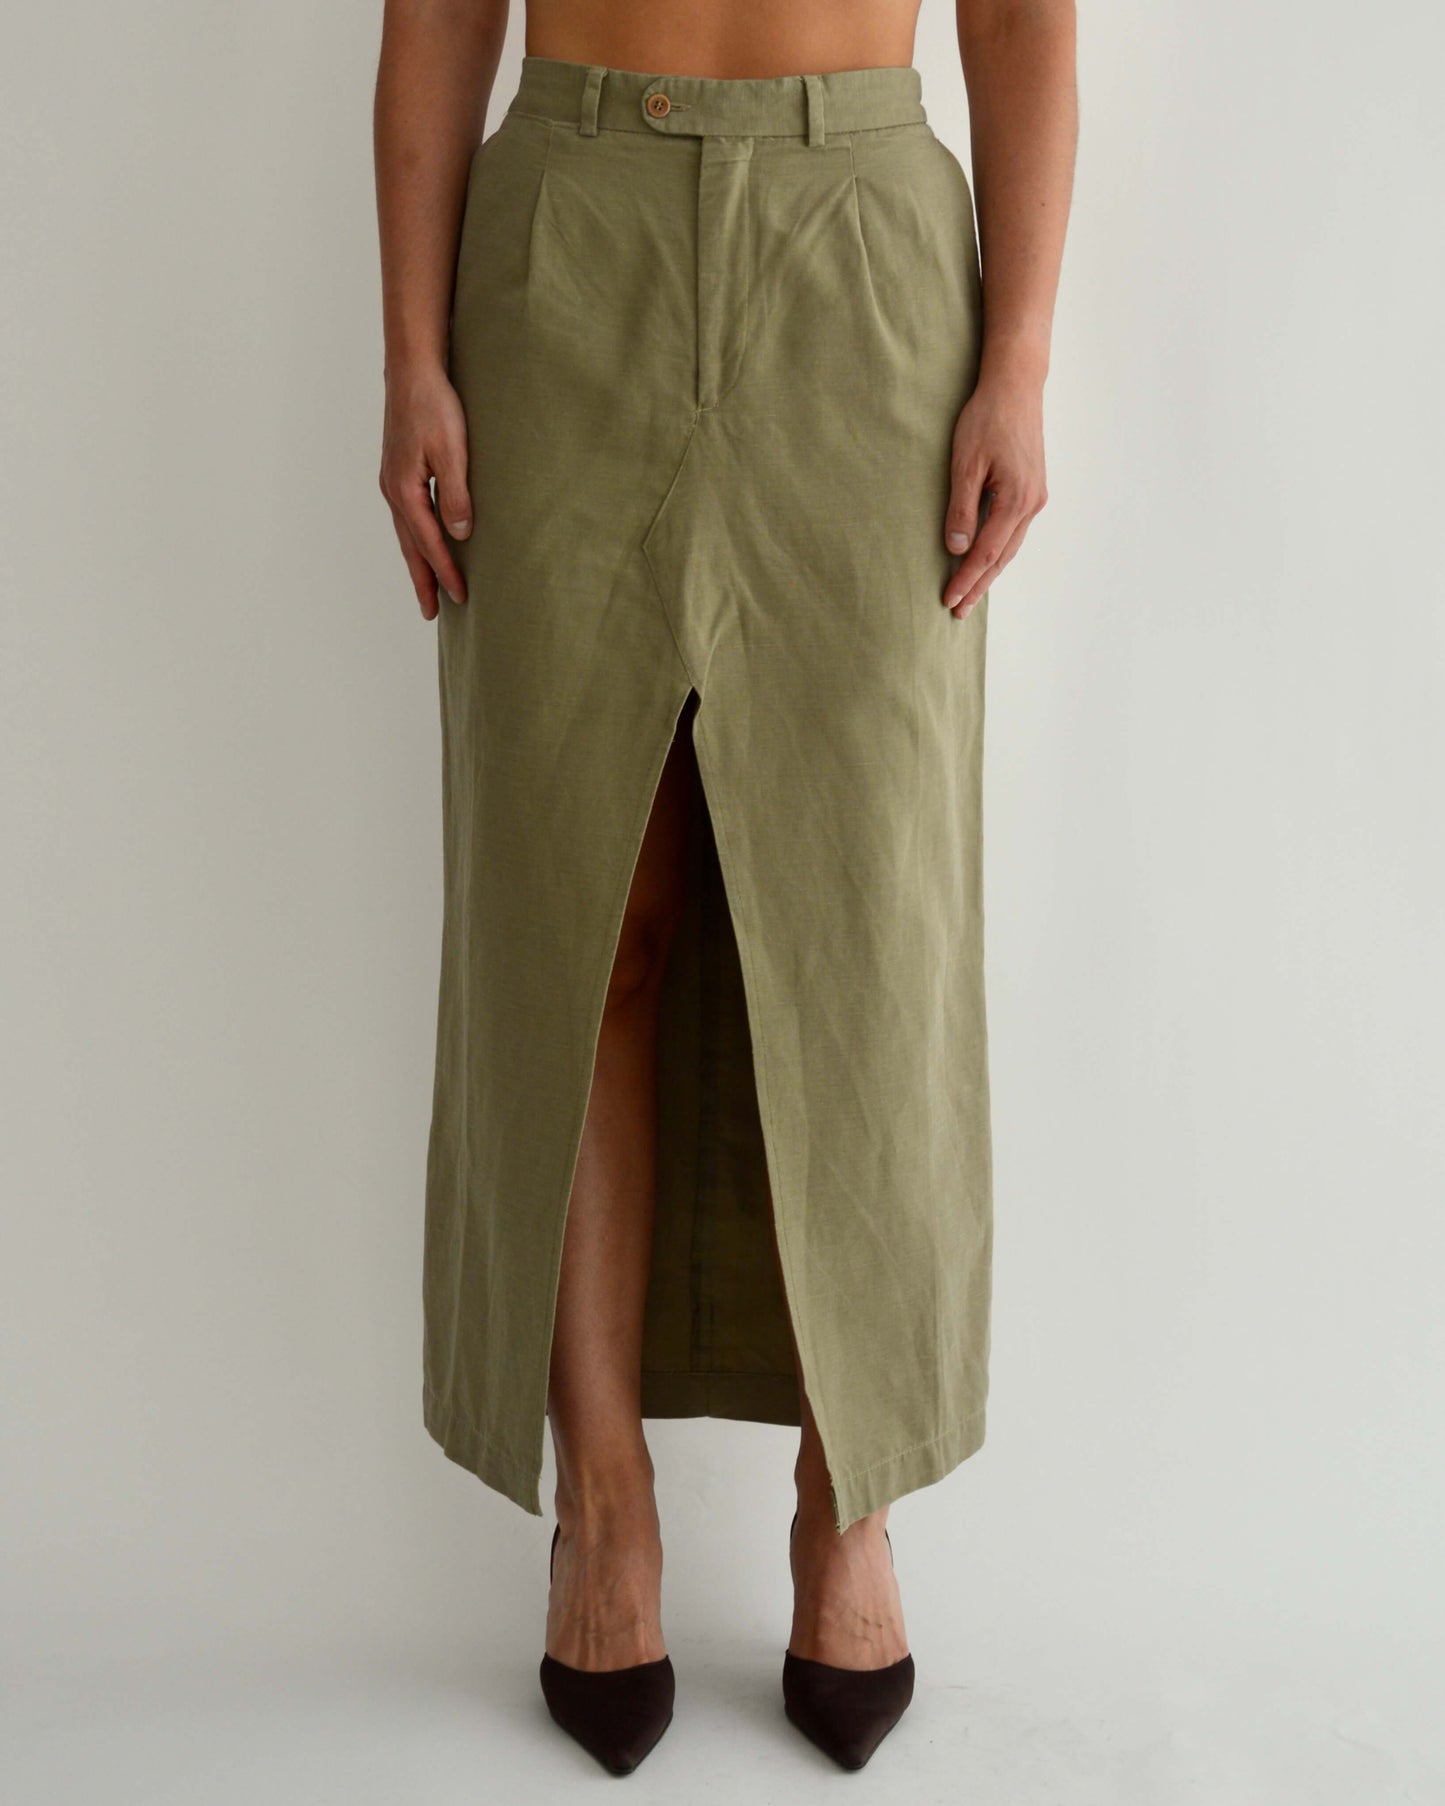 Vegan Long Skirt - Perfect Olive (S/M)